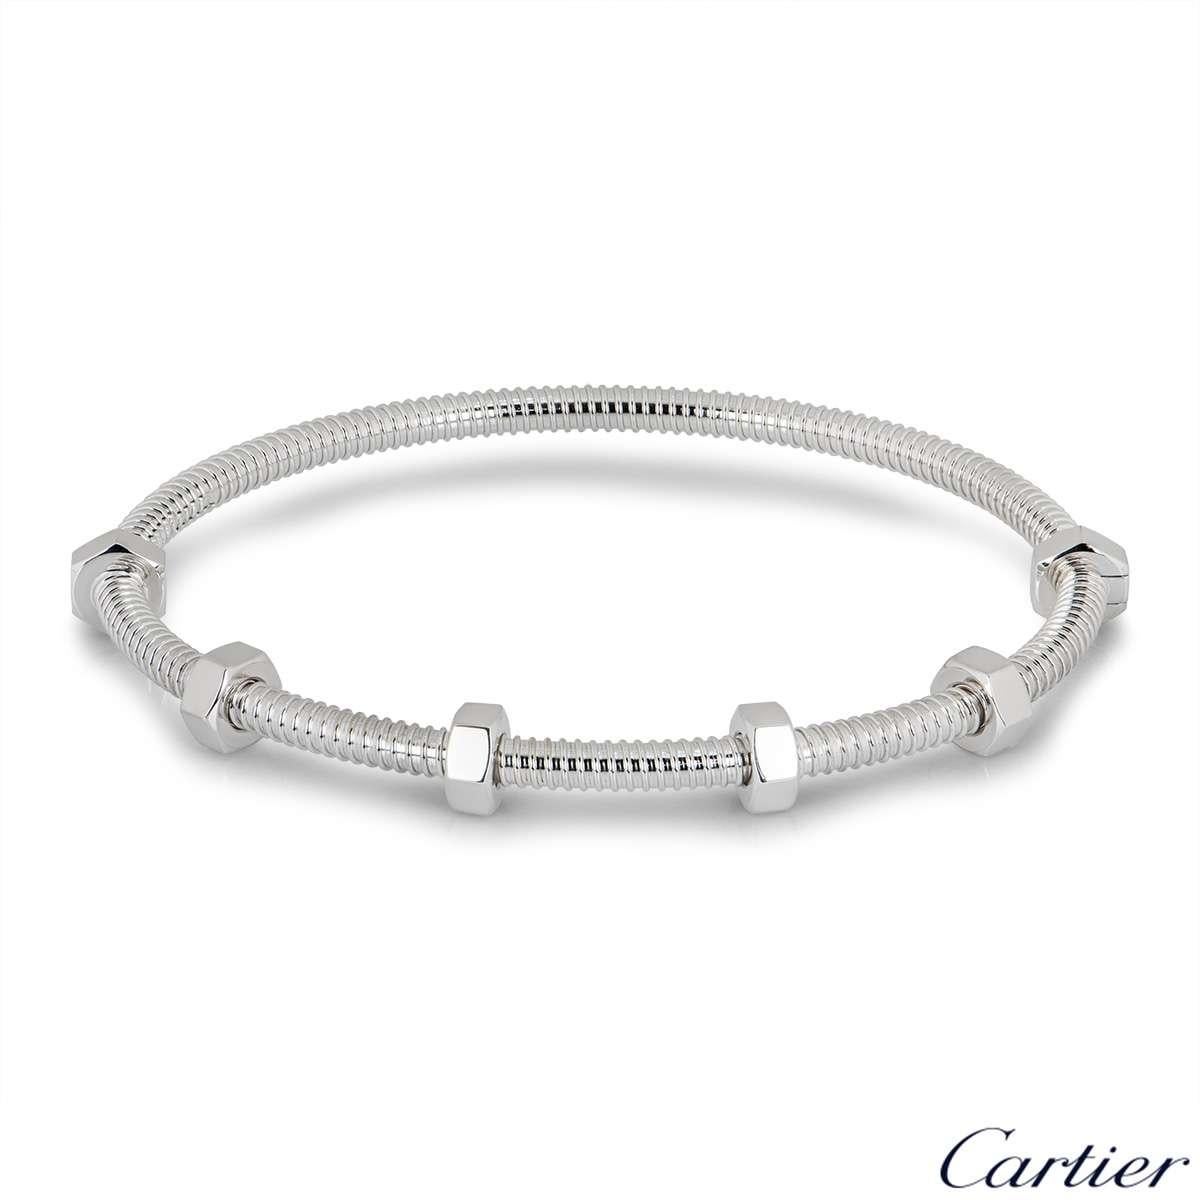 Cartier White Gold Ecrou De Cartier Bracelet B6049616